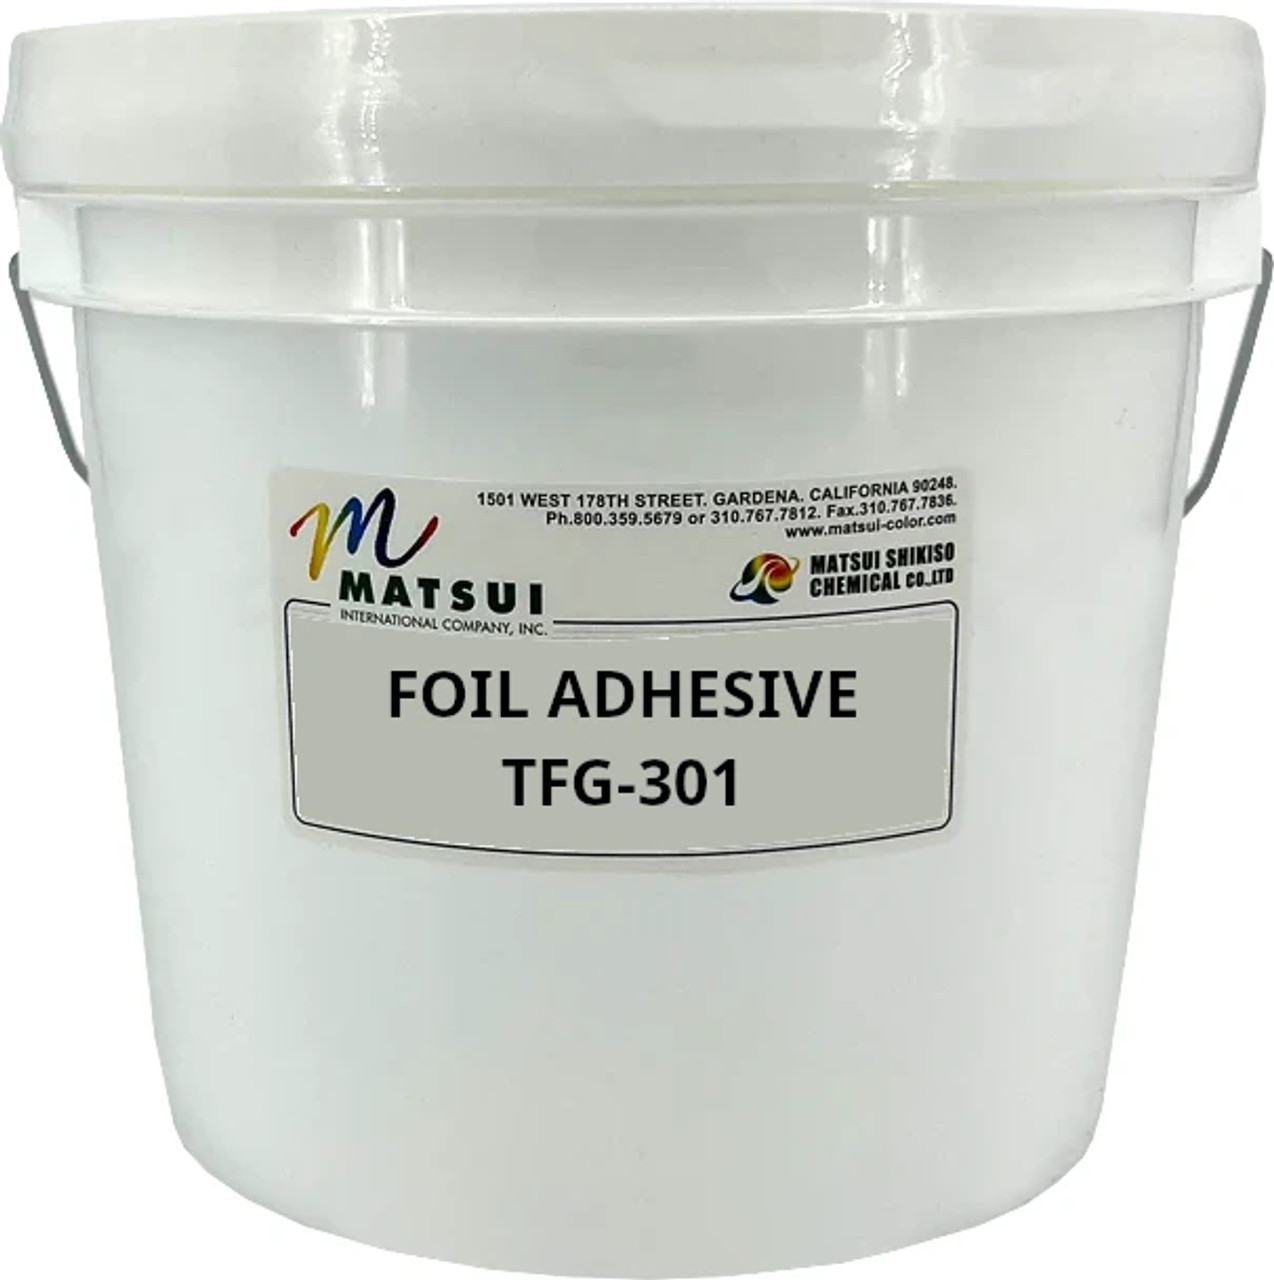 Matsui Foil Adhesive TFG-301